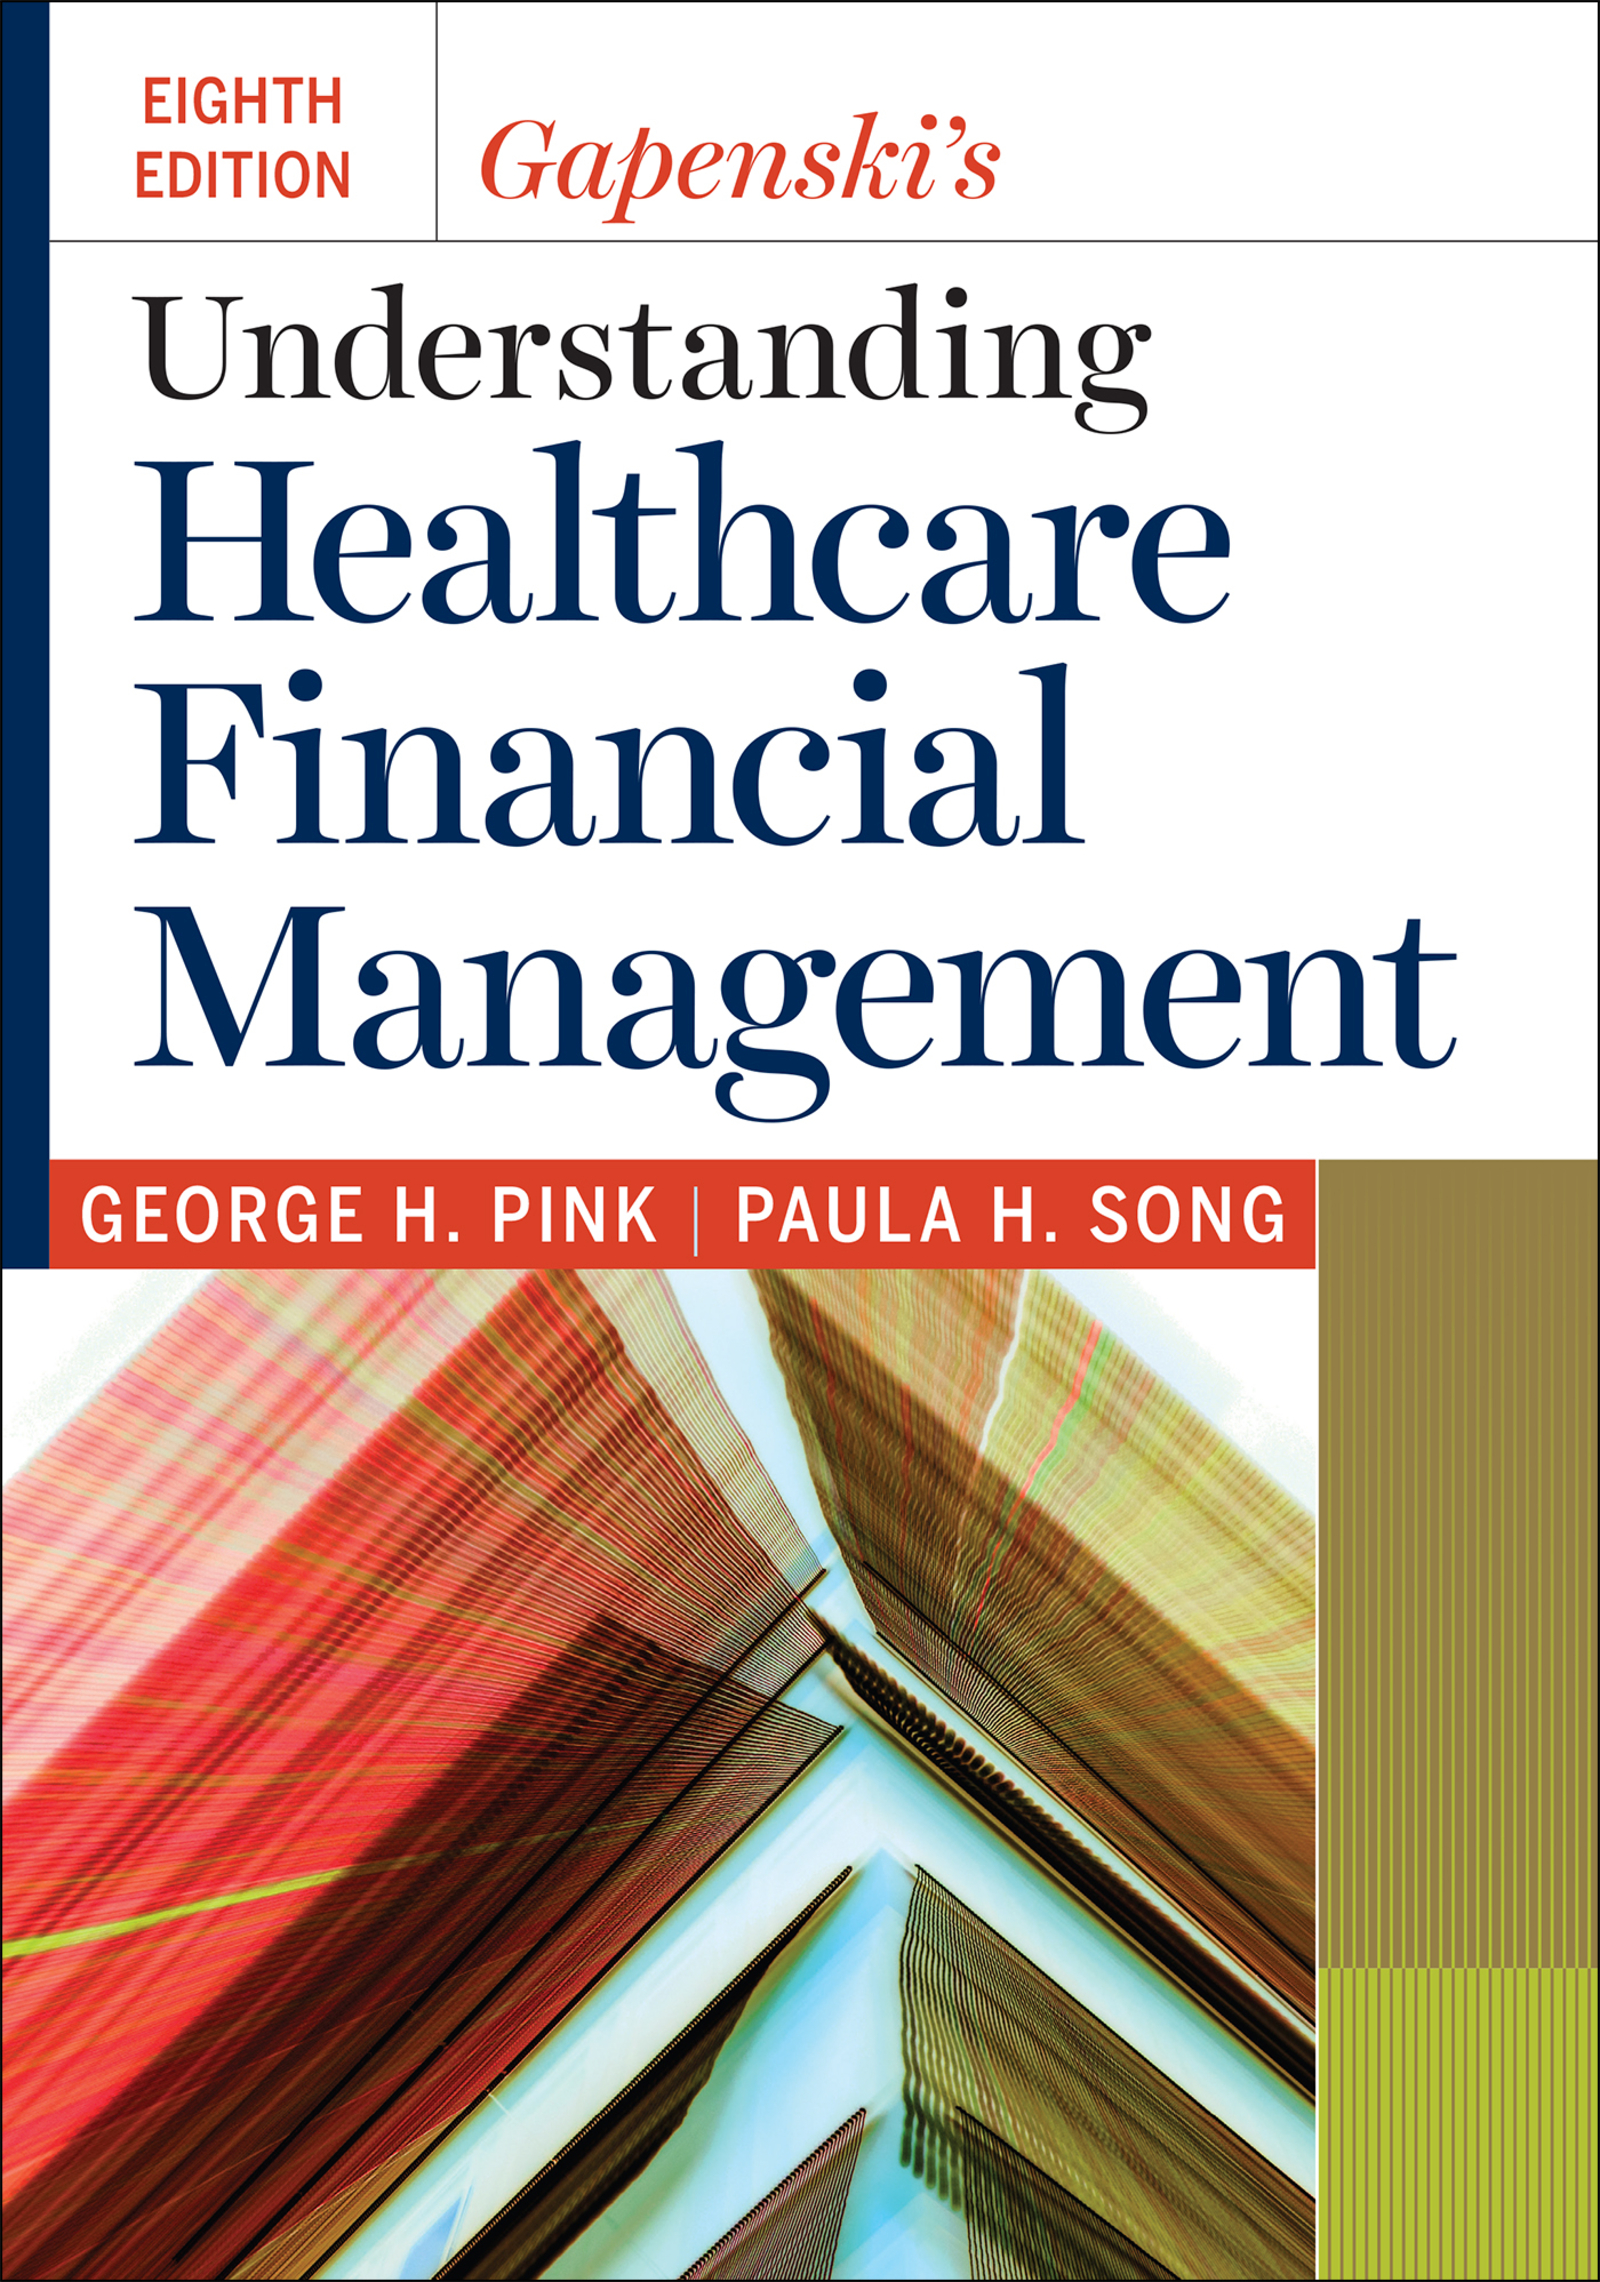 Gapenski's Understanding Healthcare Financial Management, Eighth Edition